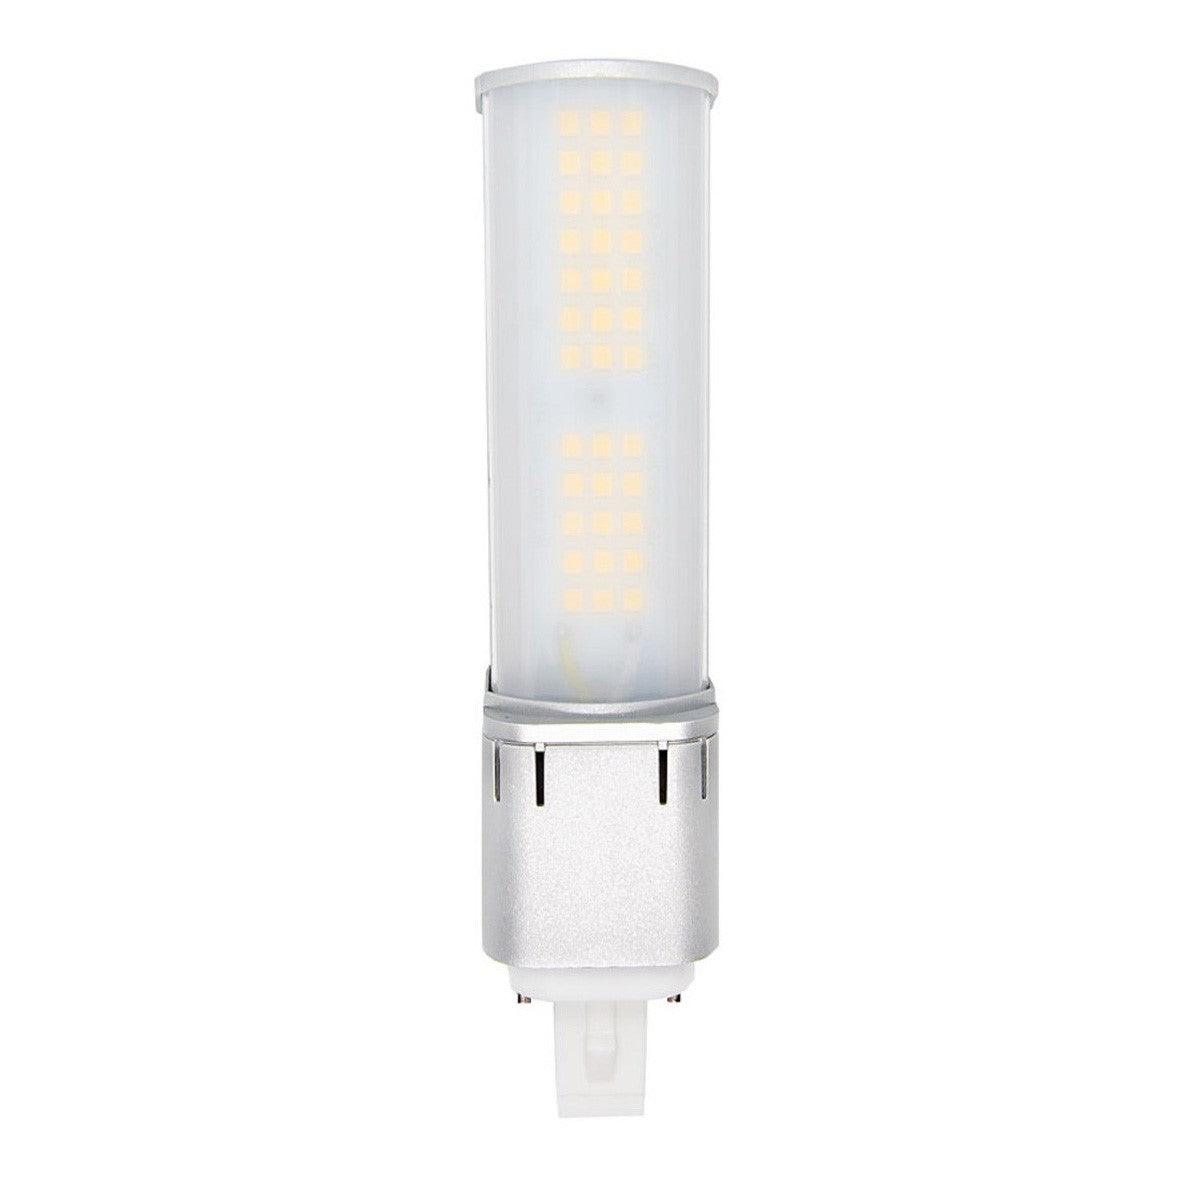 2 pin PL LED Bulb, 7 Watt 920 Lumens, 5000K, Horizontal, Replaces 13W CFL, G23 Base, Direct Or Bypass - Bees Lighting